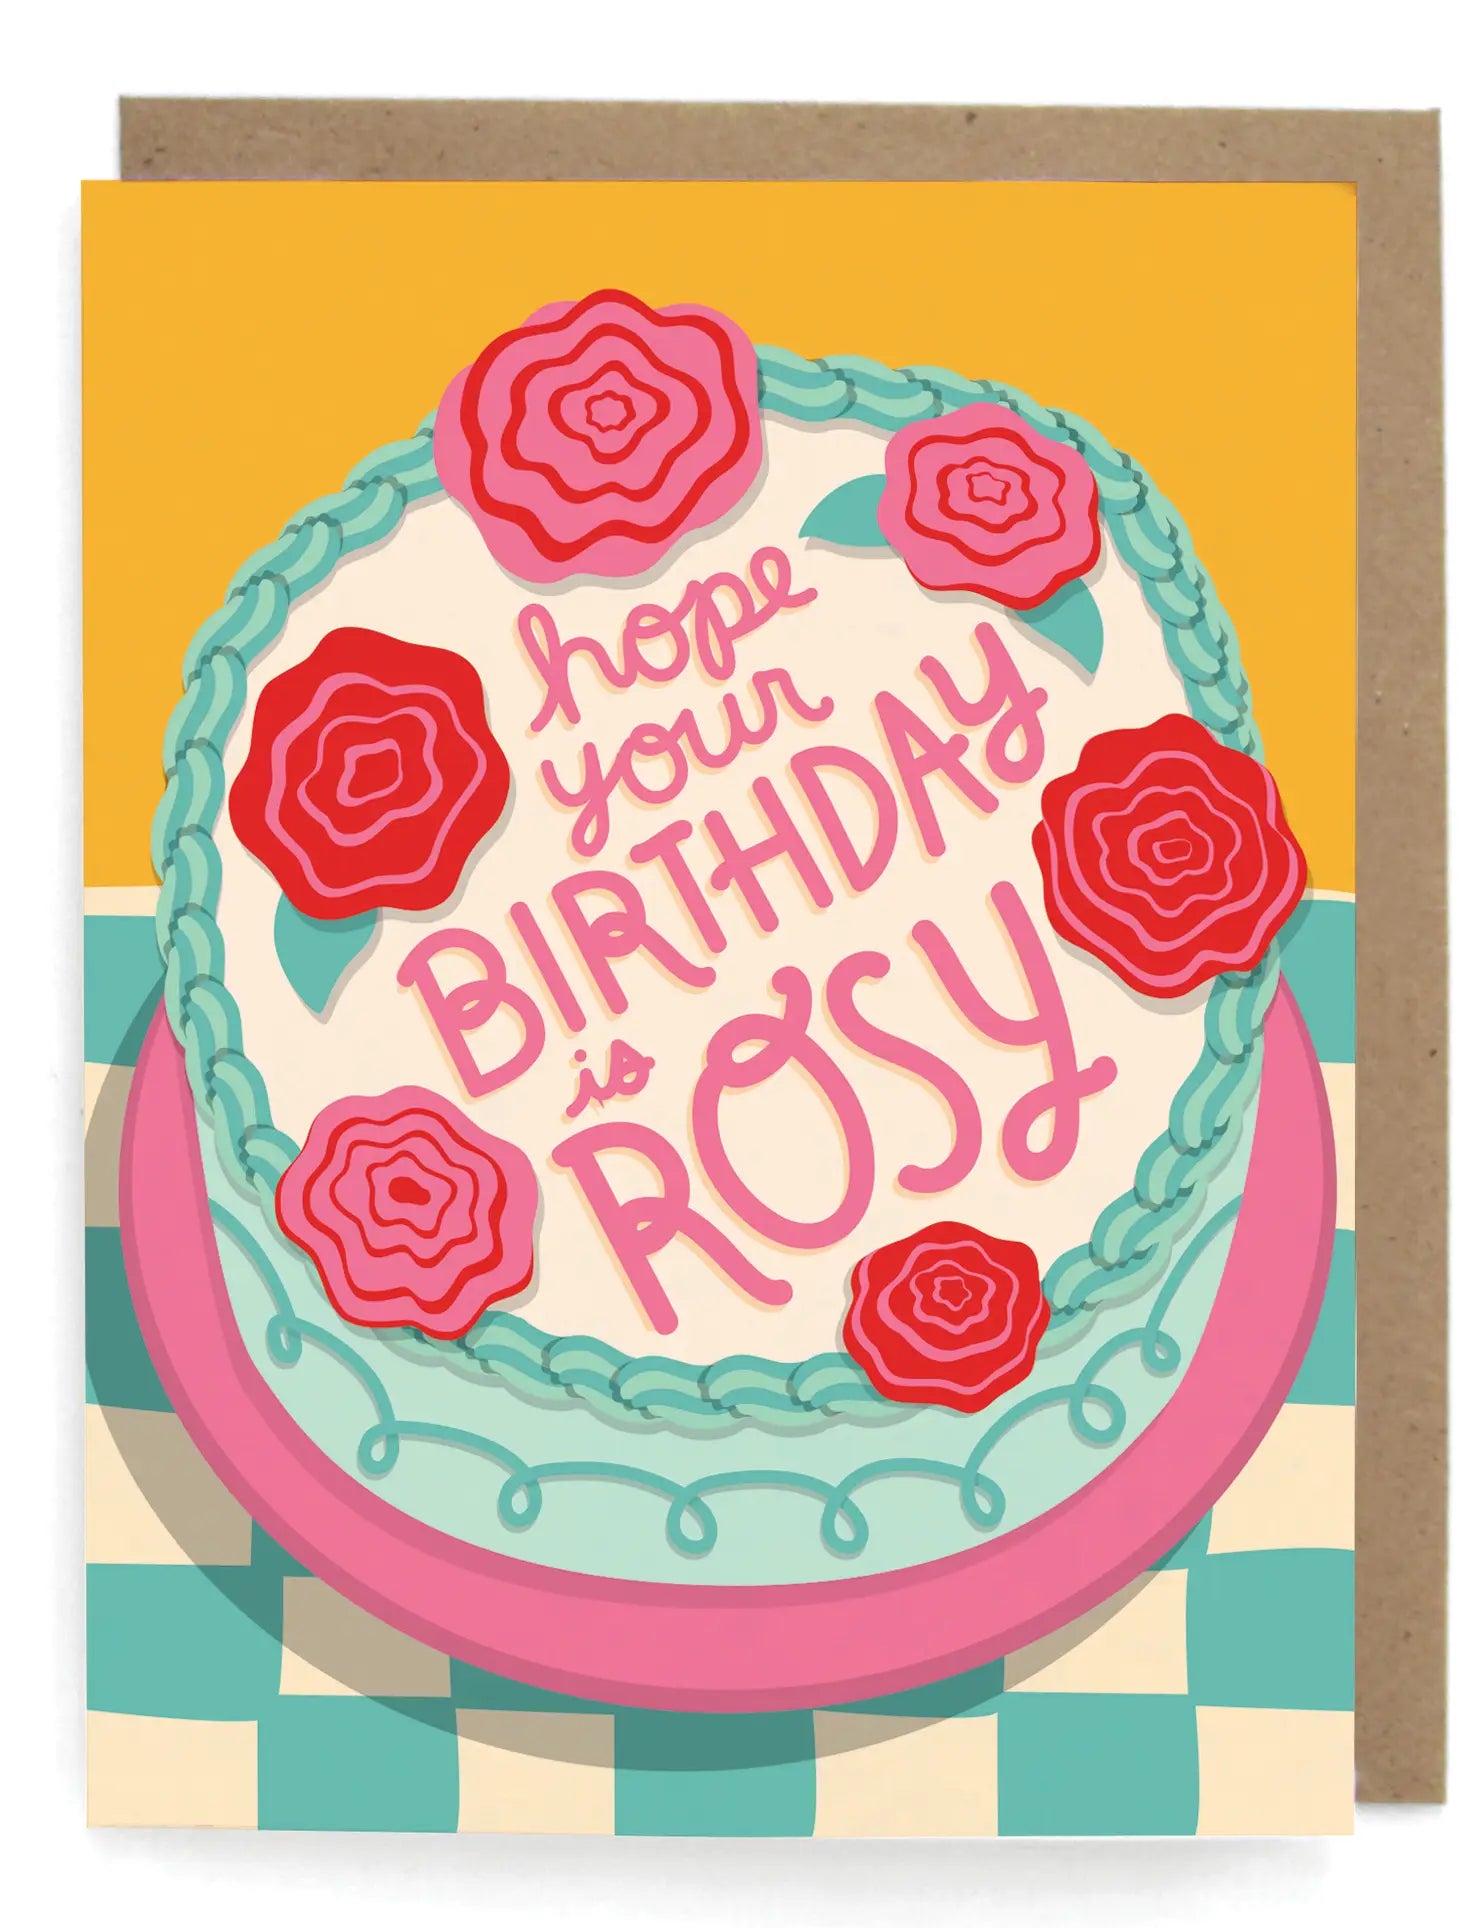 Rosy Birthday Card - Moon Room Shop and Wellness